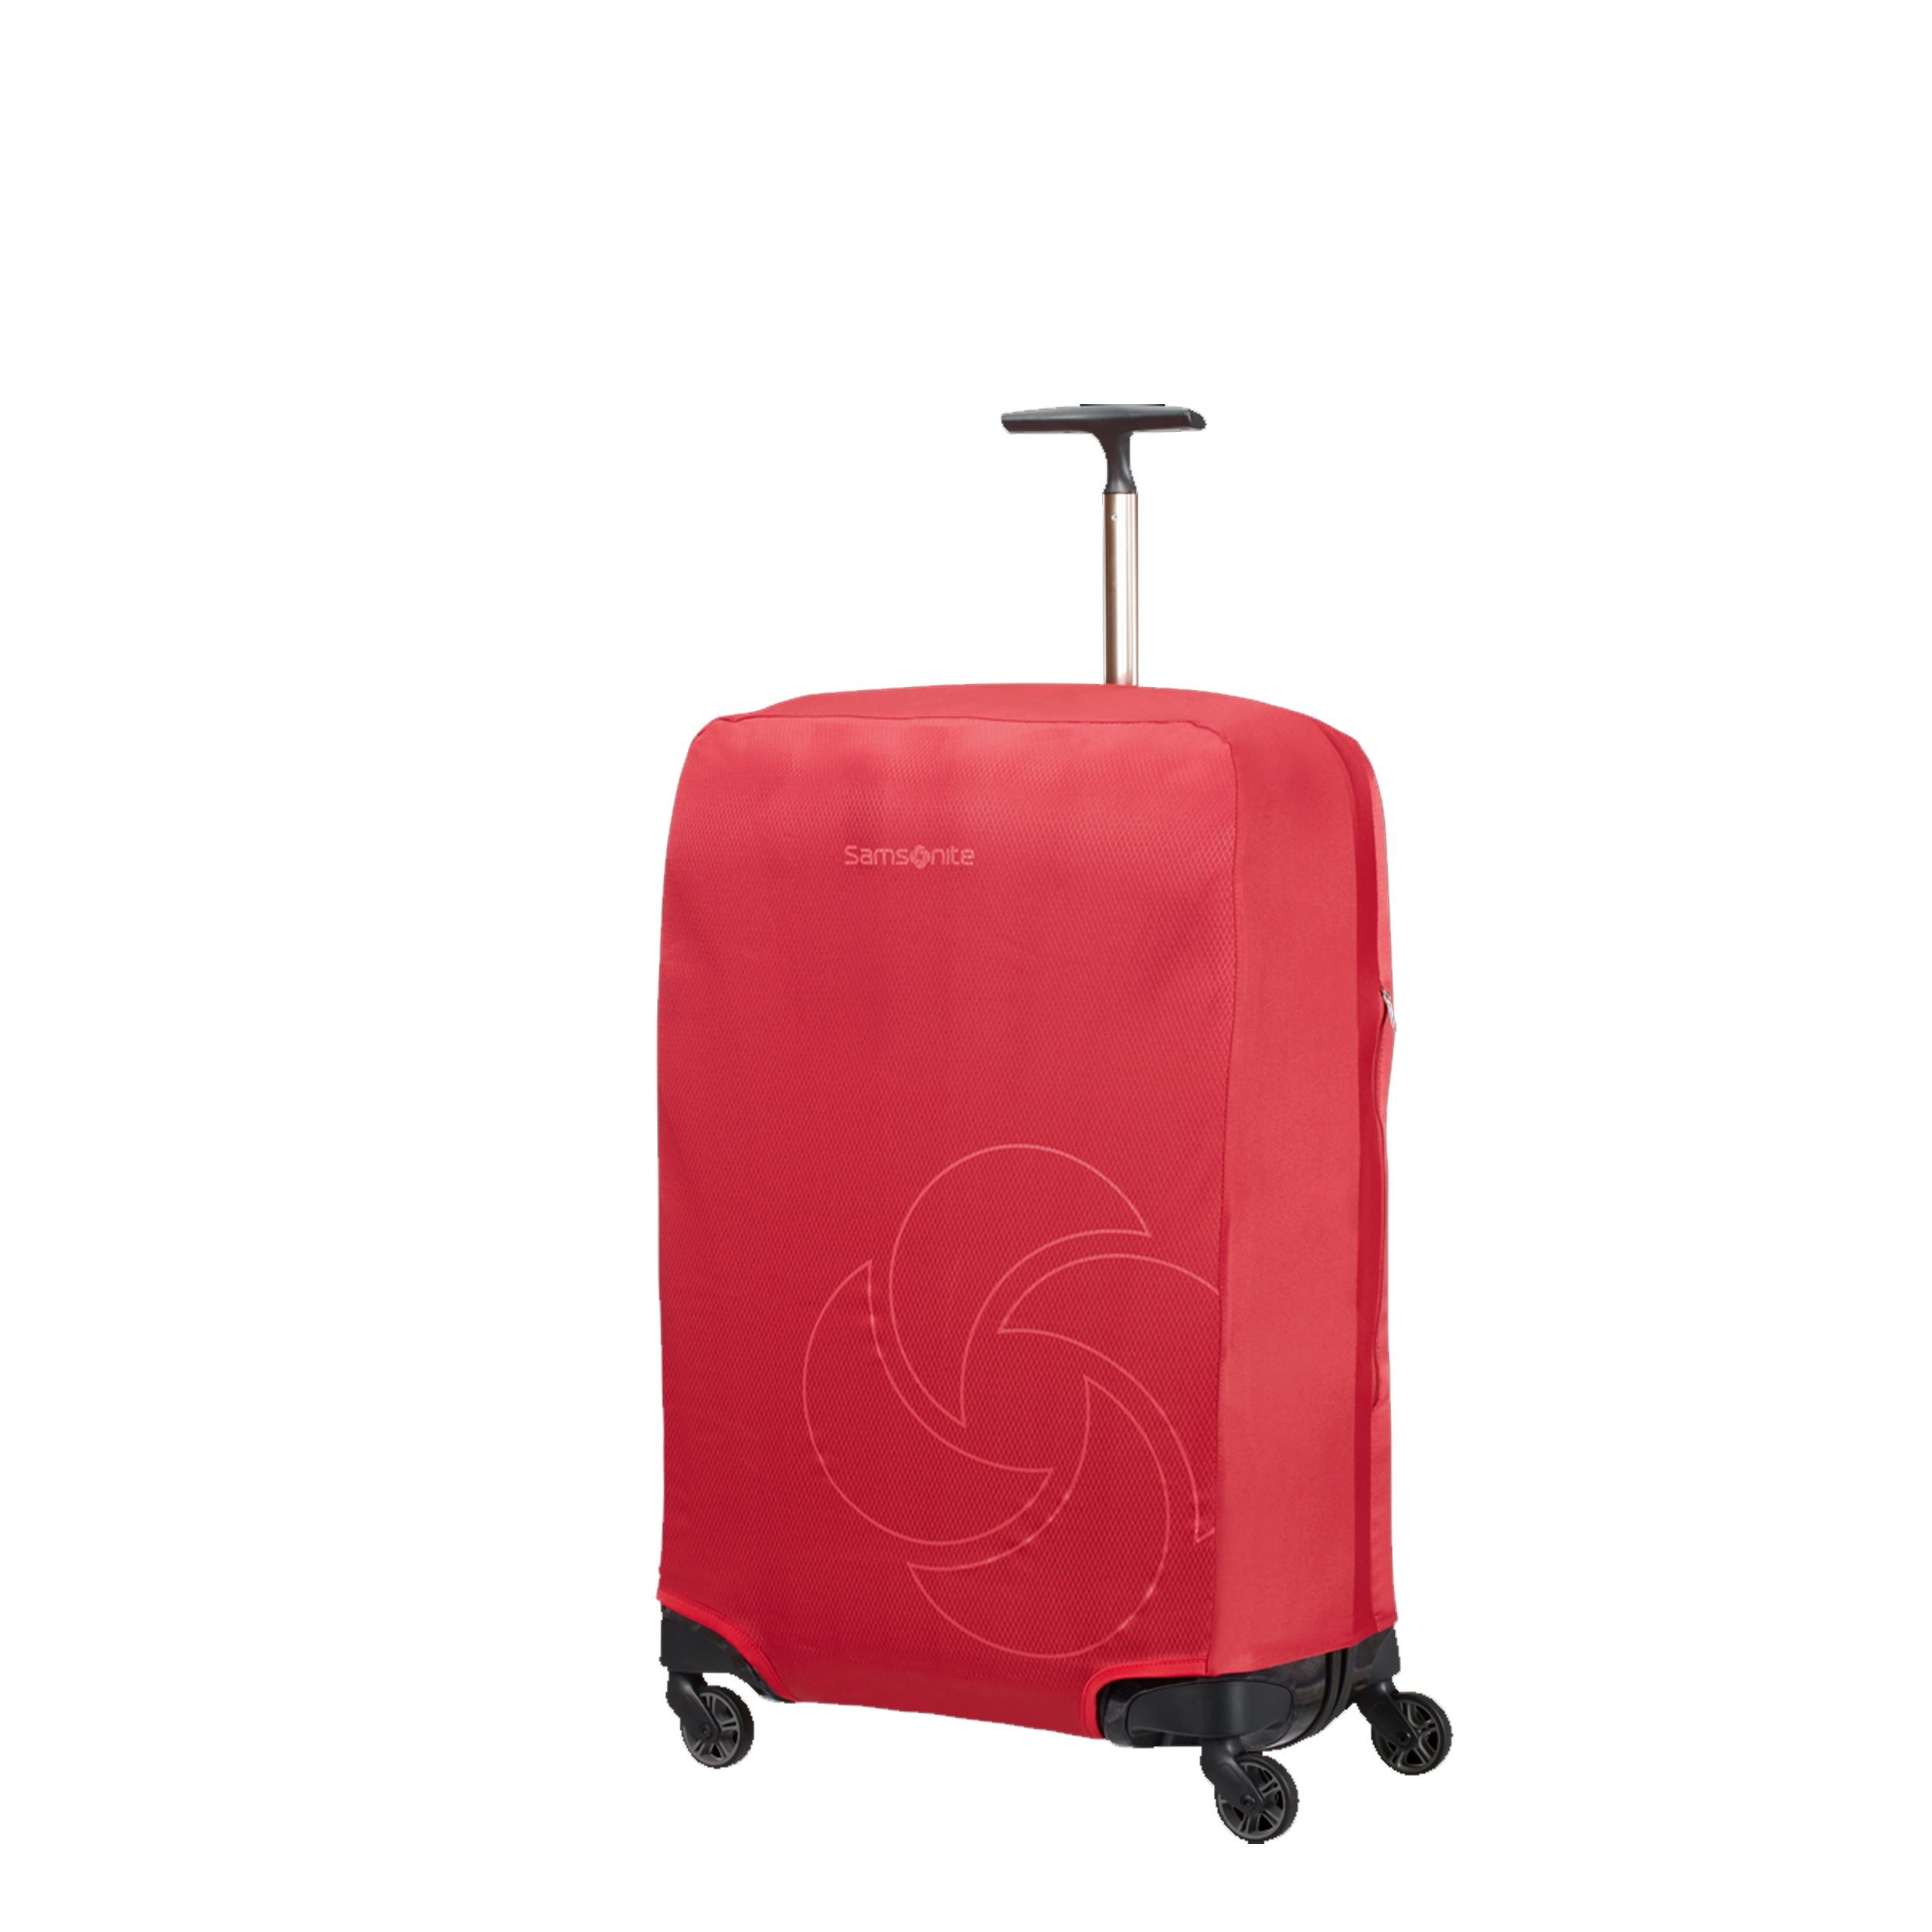 housse valise samsonite taille 65cm rouge